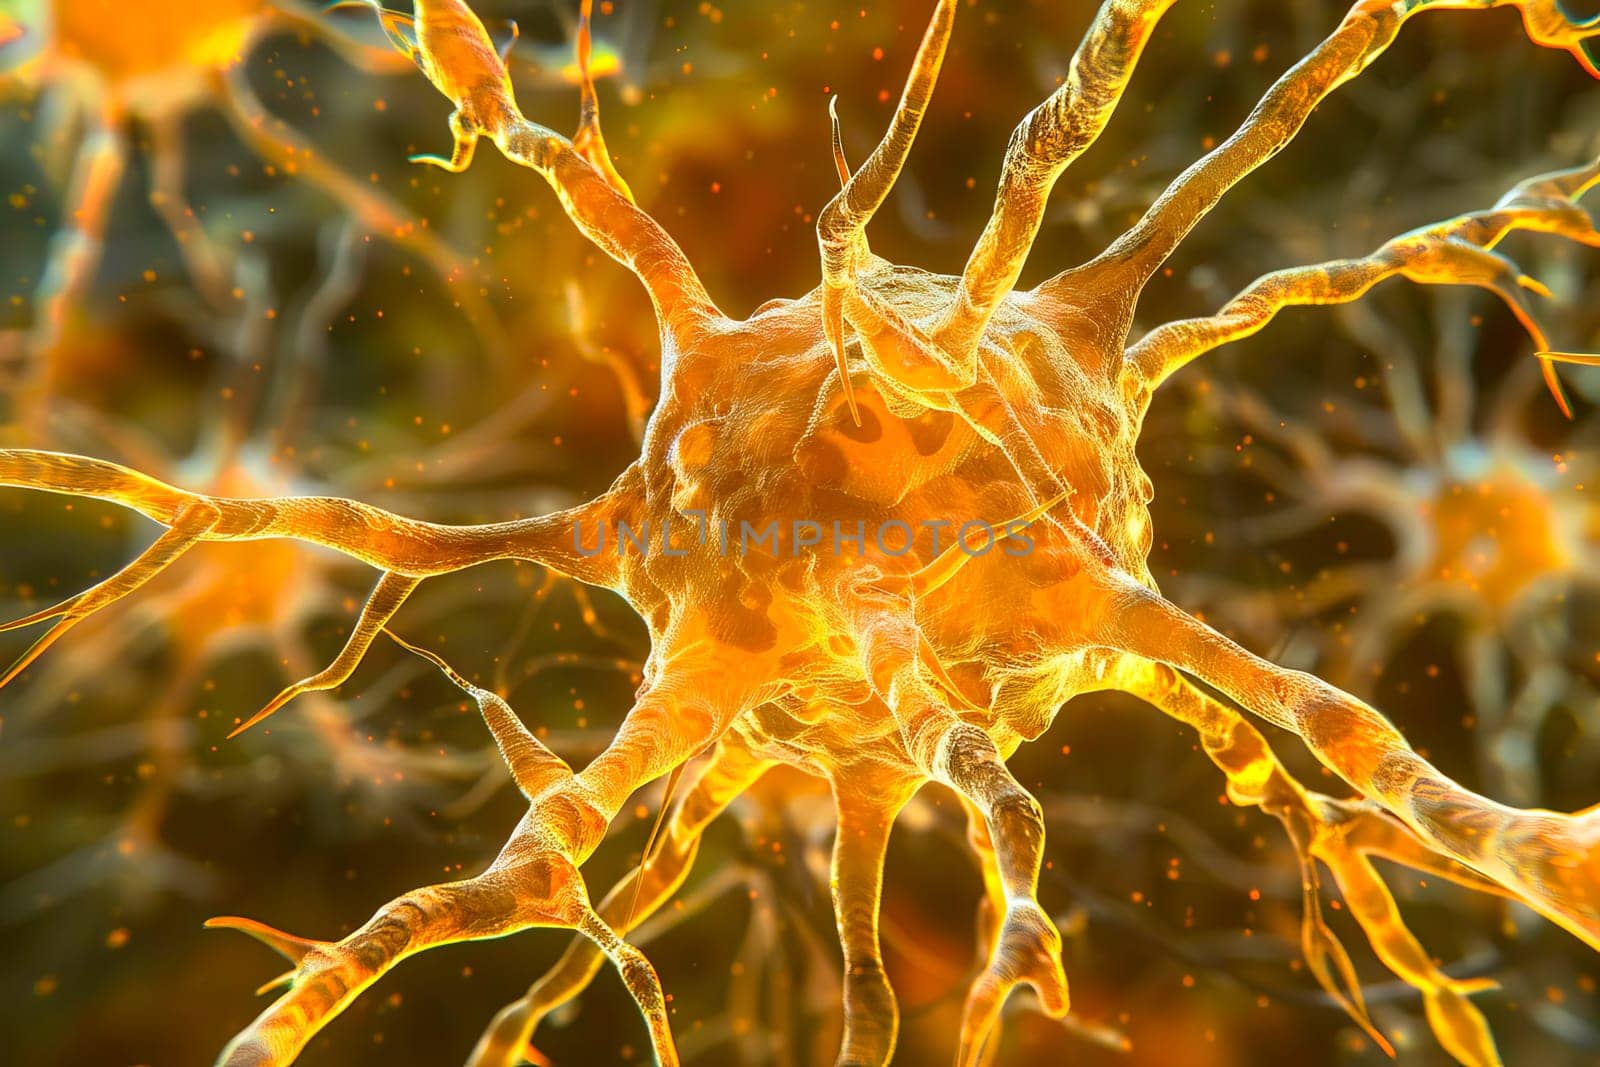 A close-up view of neural activity in the human brain, showcasing firing neurons by vladimka